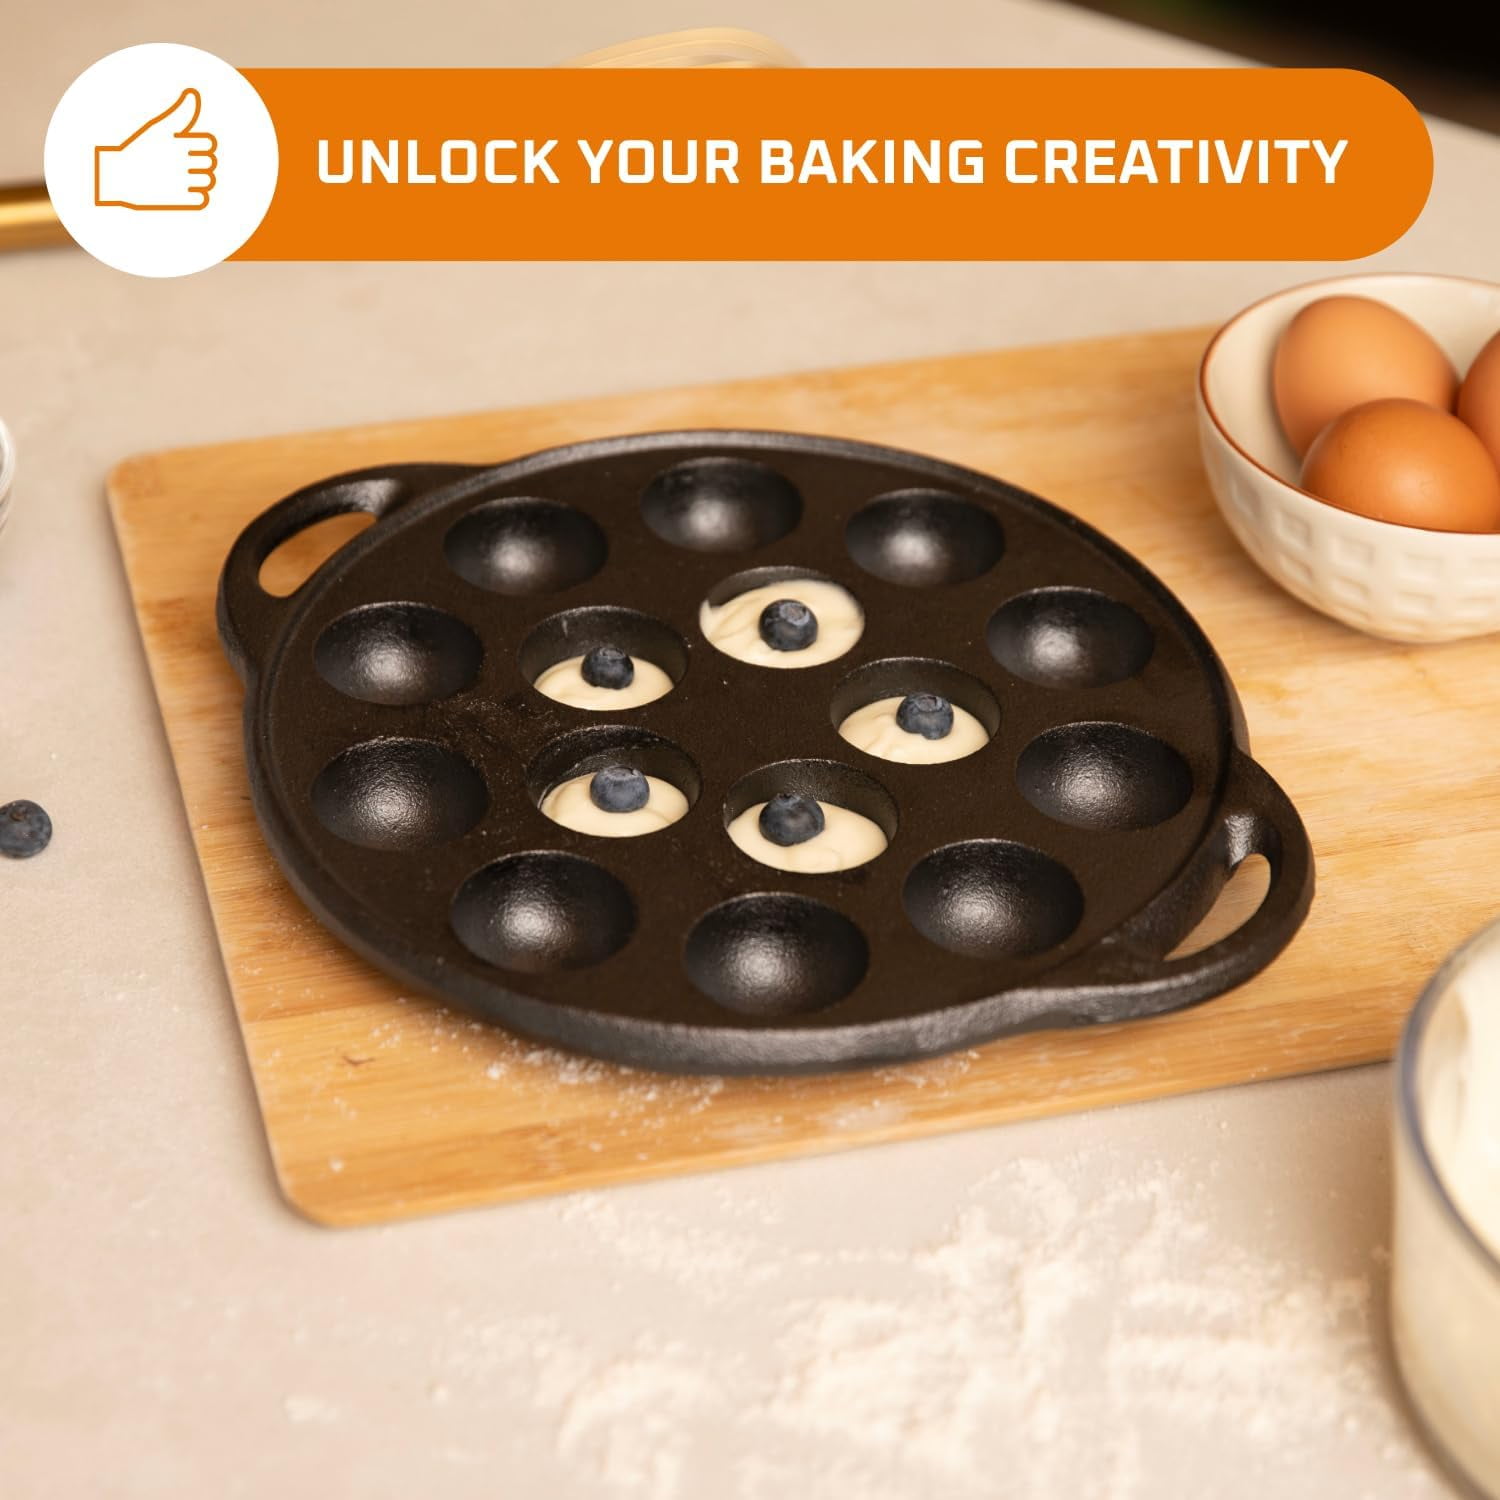 SUNSHNO Cast Iron Biscuit Pan Mini Cake Pan with Handles, Pre-Seasoned  Baking Set 7 Cake Baking Tray Maker Pan for Biscuits, Bake Muffins,  Cornbread